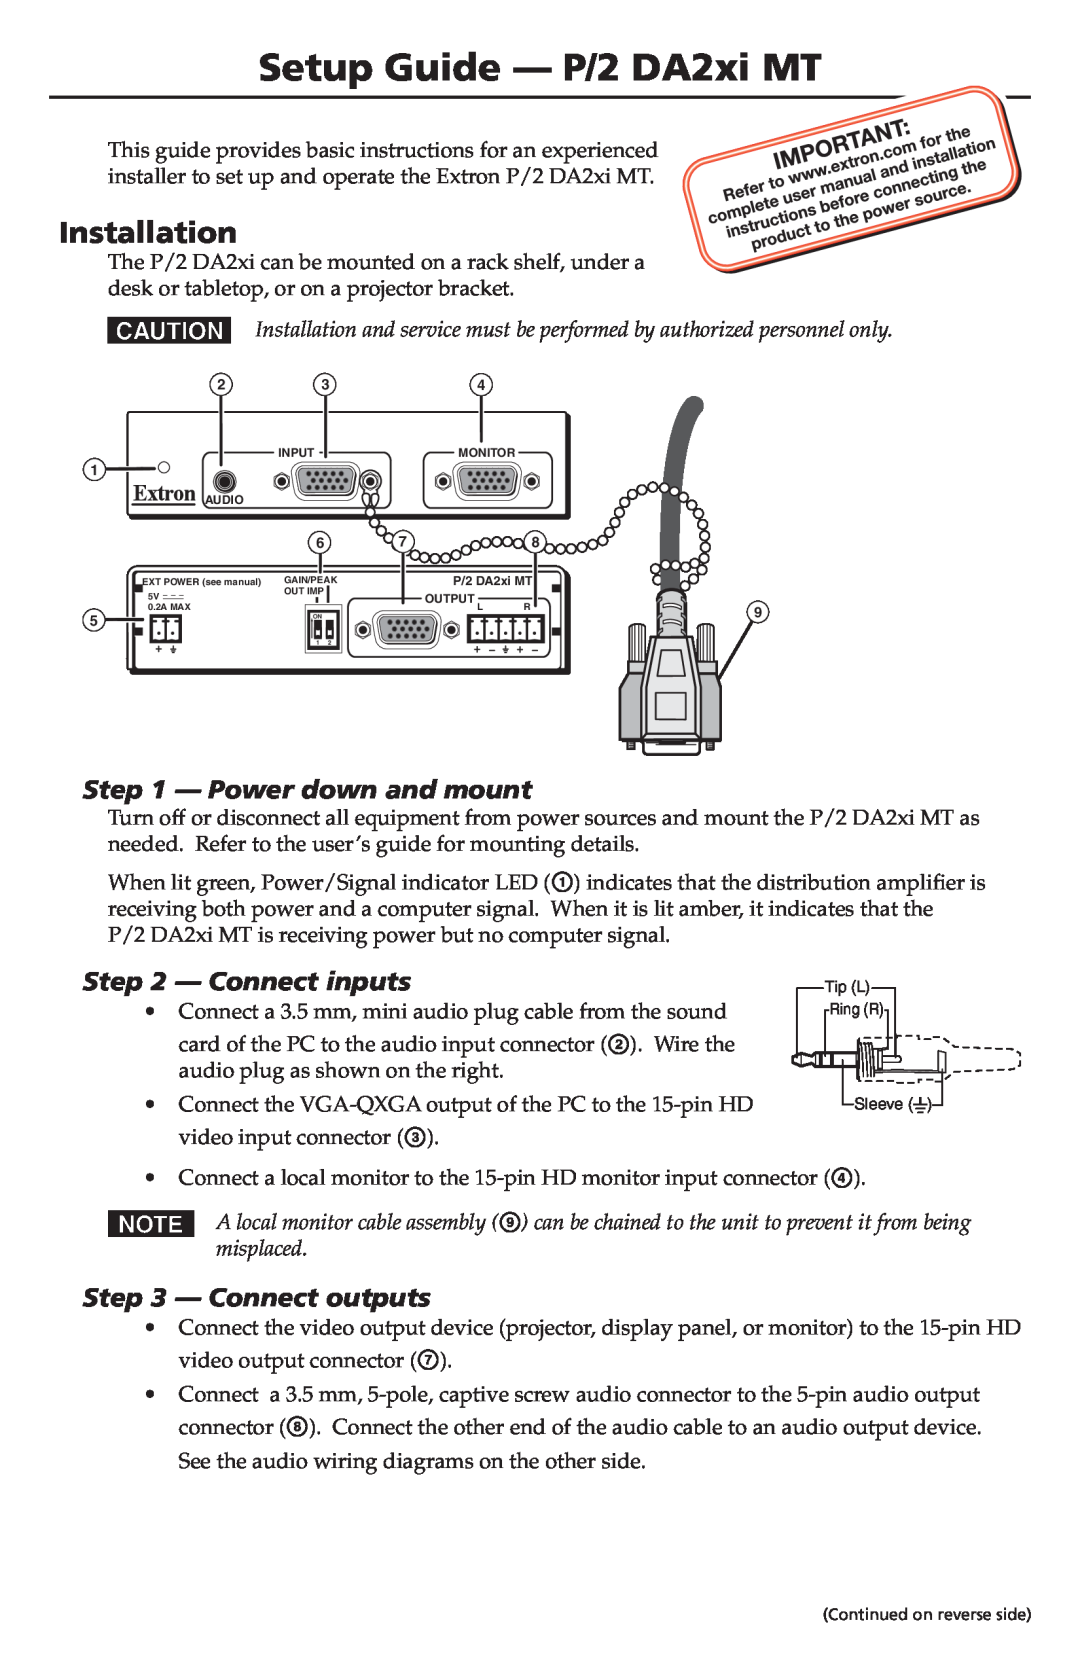 Extron electronic P/2 DA2XI MT specifications FCC Class A Notice, General, Distribution Amplifiers, P/2 DA2xi P/2 DA2xi MT 